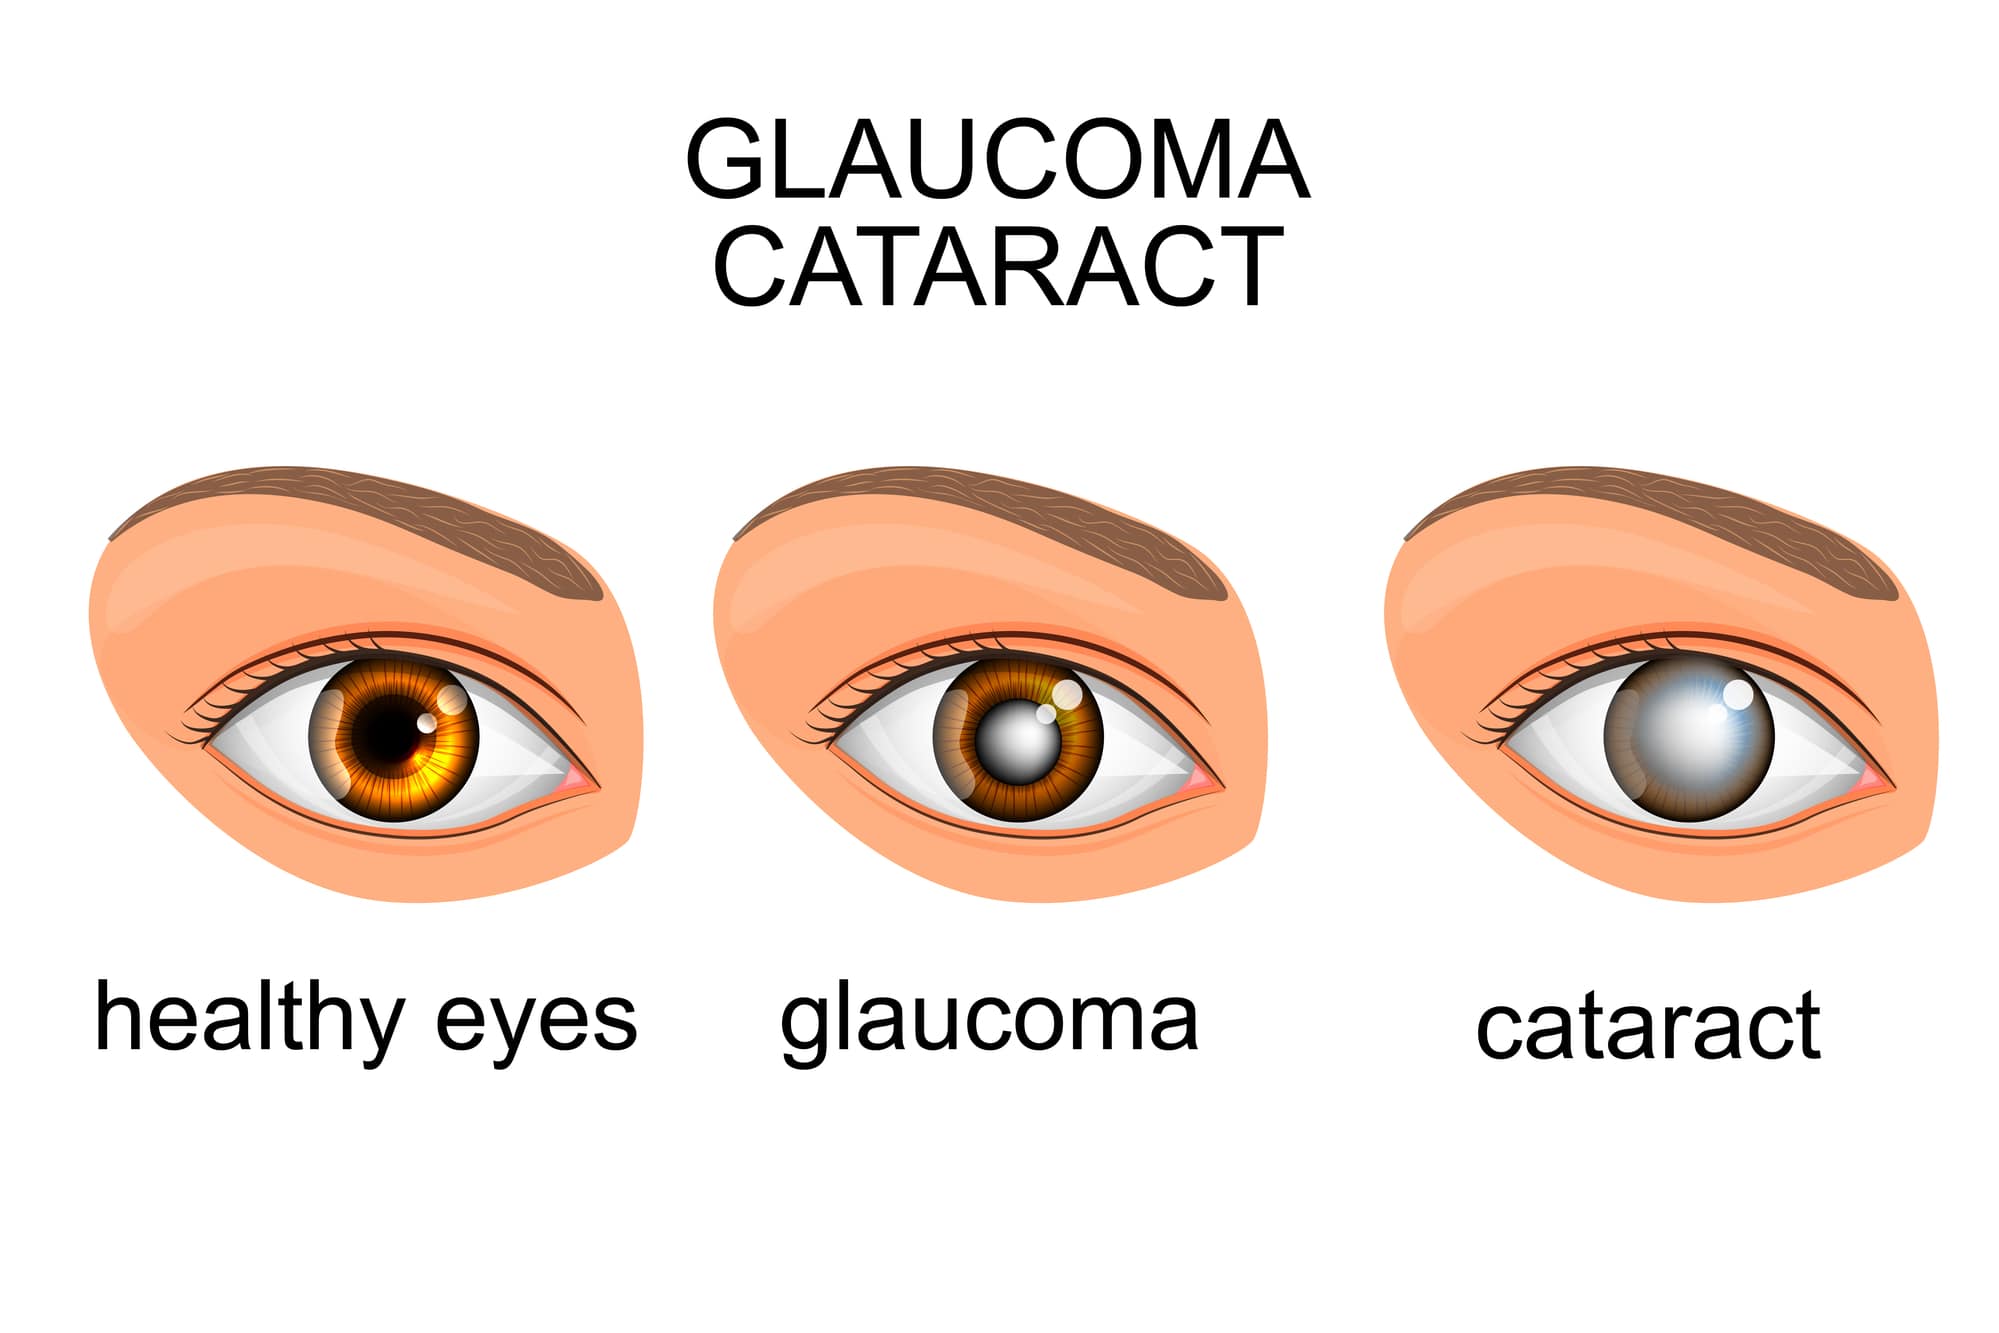 glaucoma vs cataracts